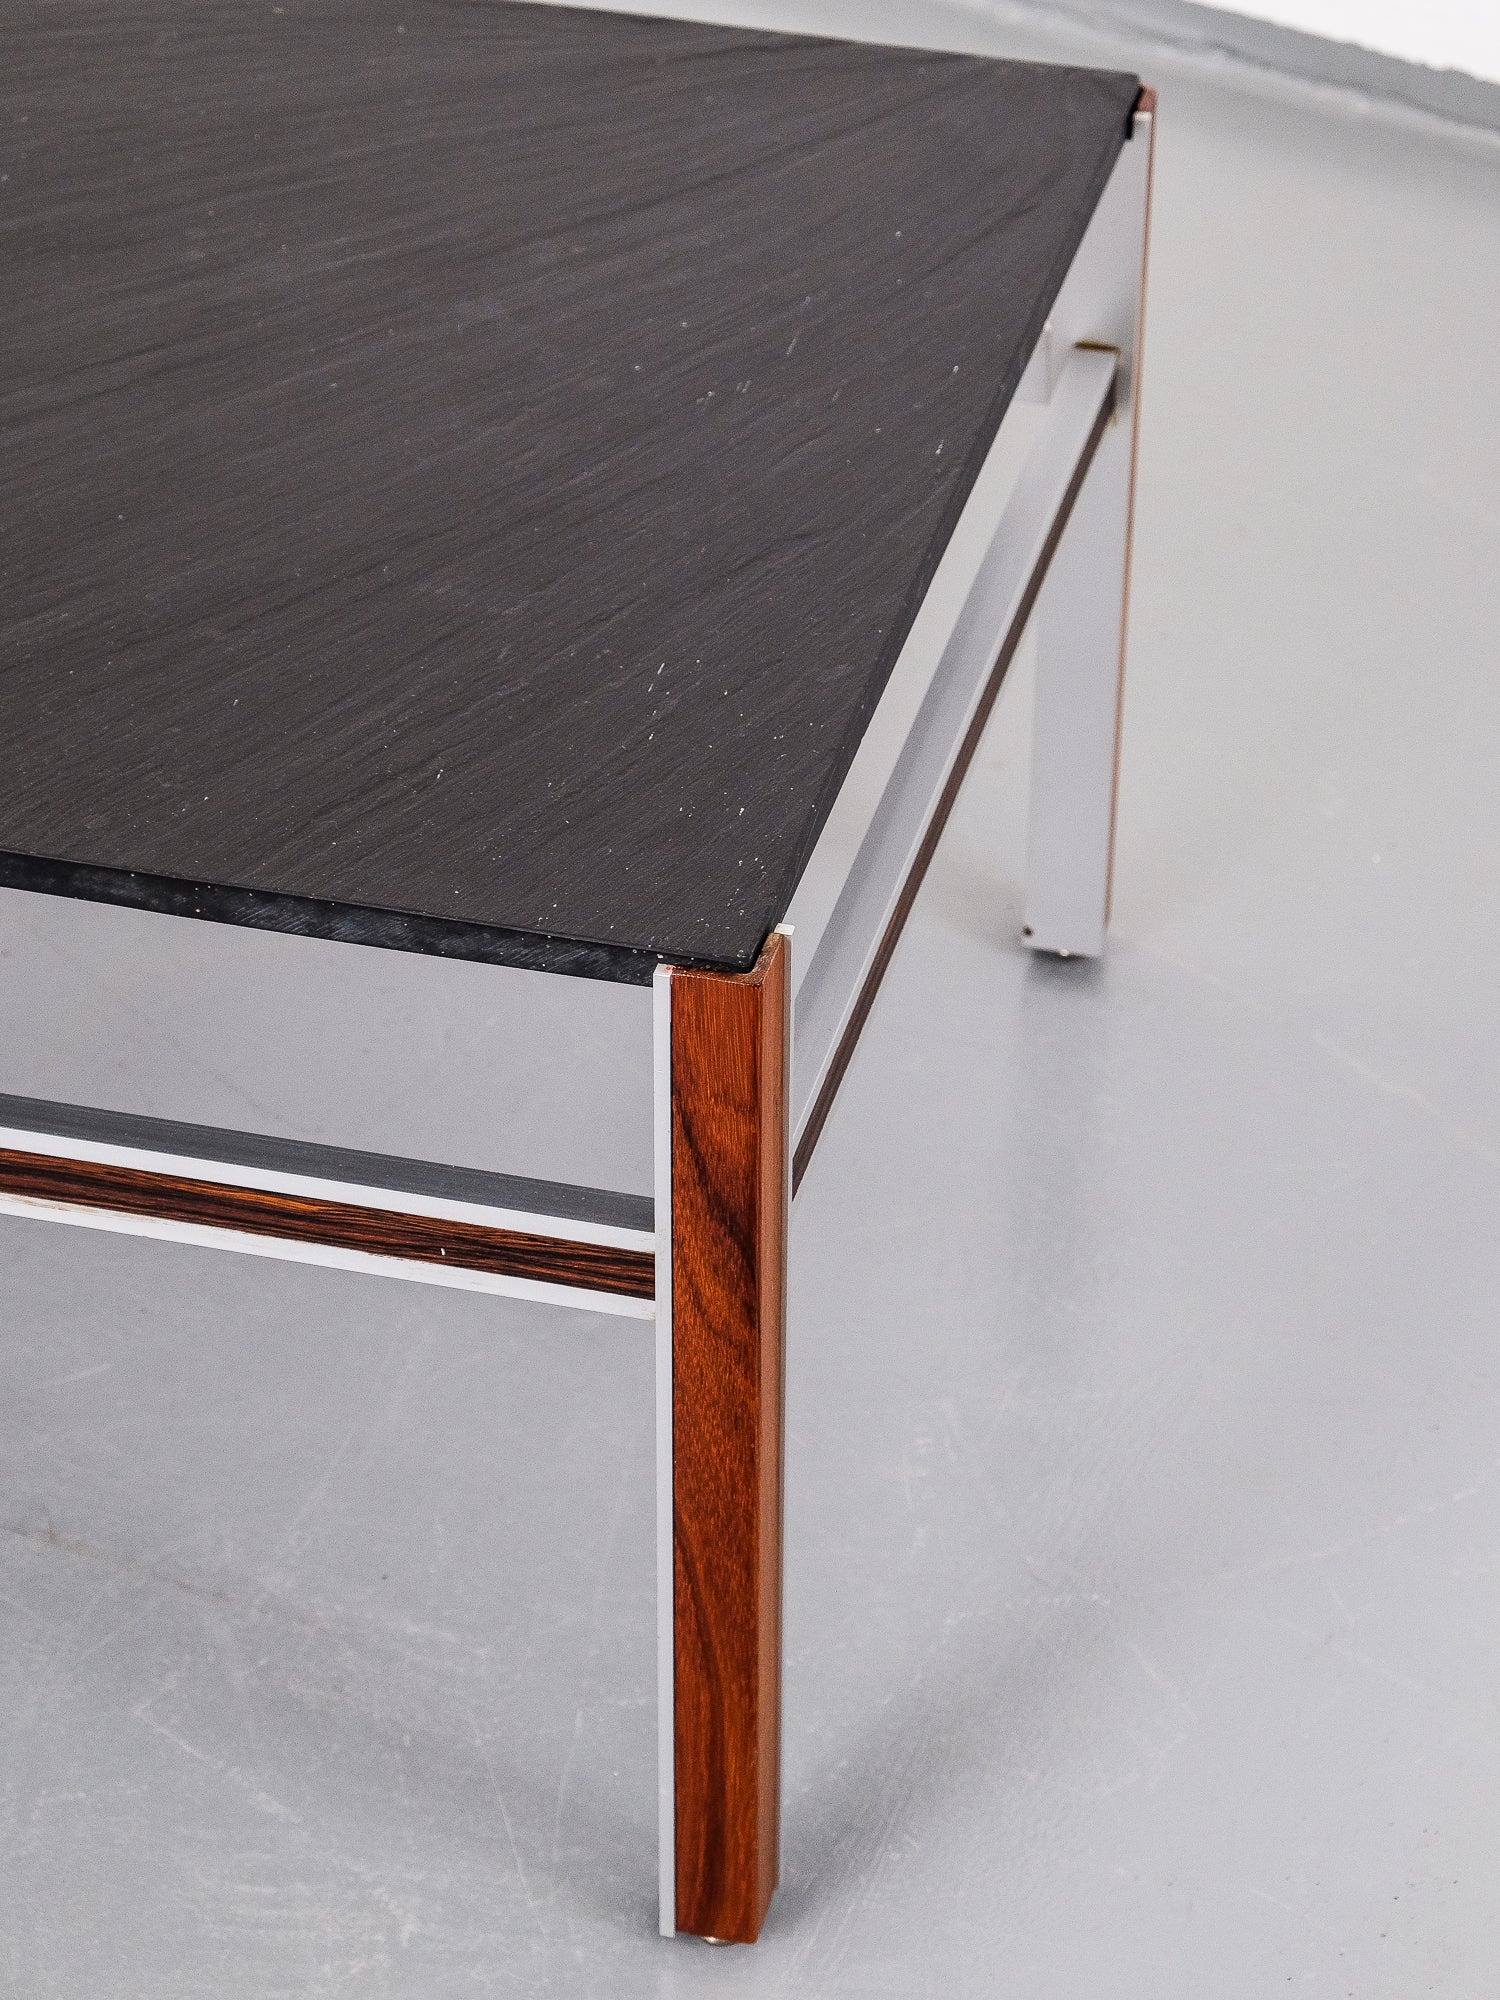 Midcentury Modern Scandinavian Natural Stone Coffee Table with Aluminium Frame